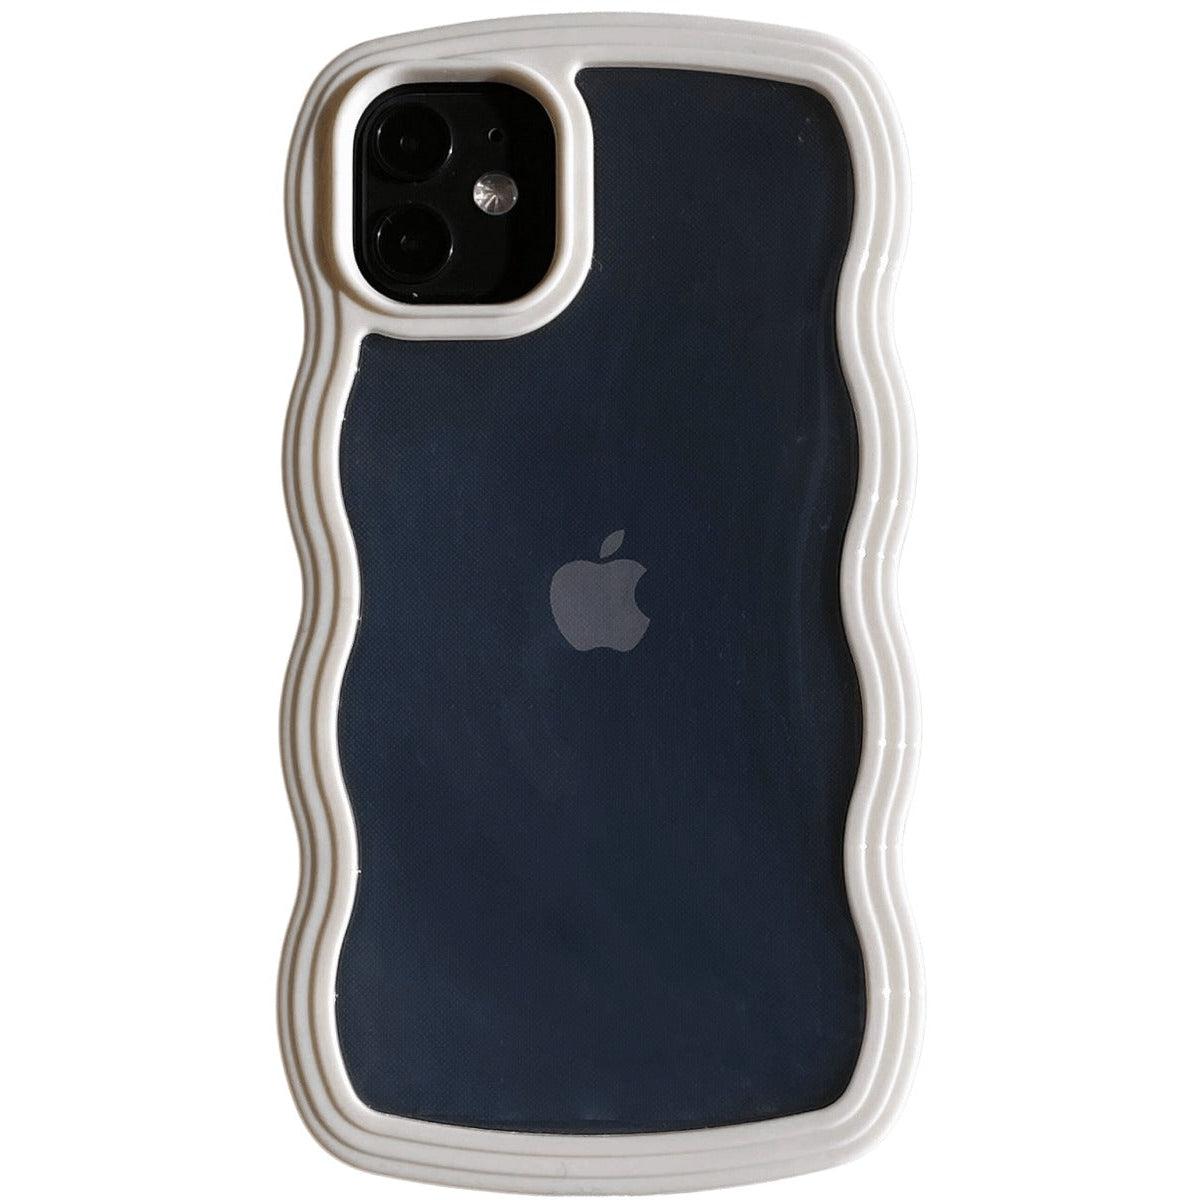 COCO iPhone Case - Spell Cases